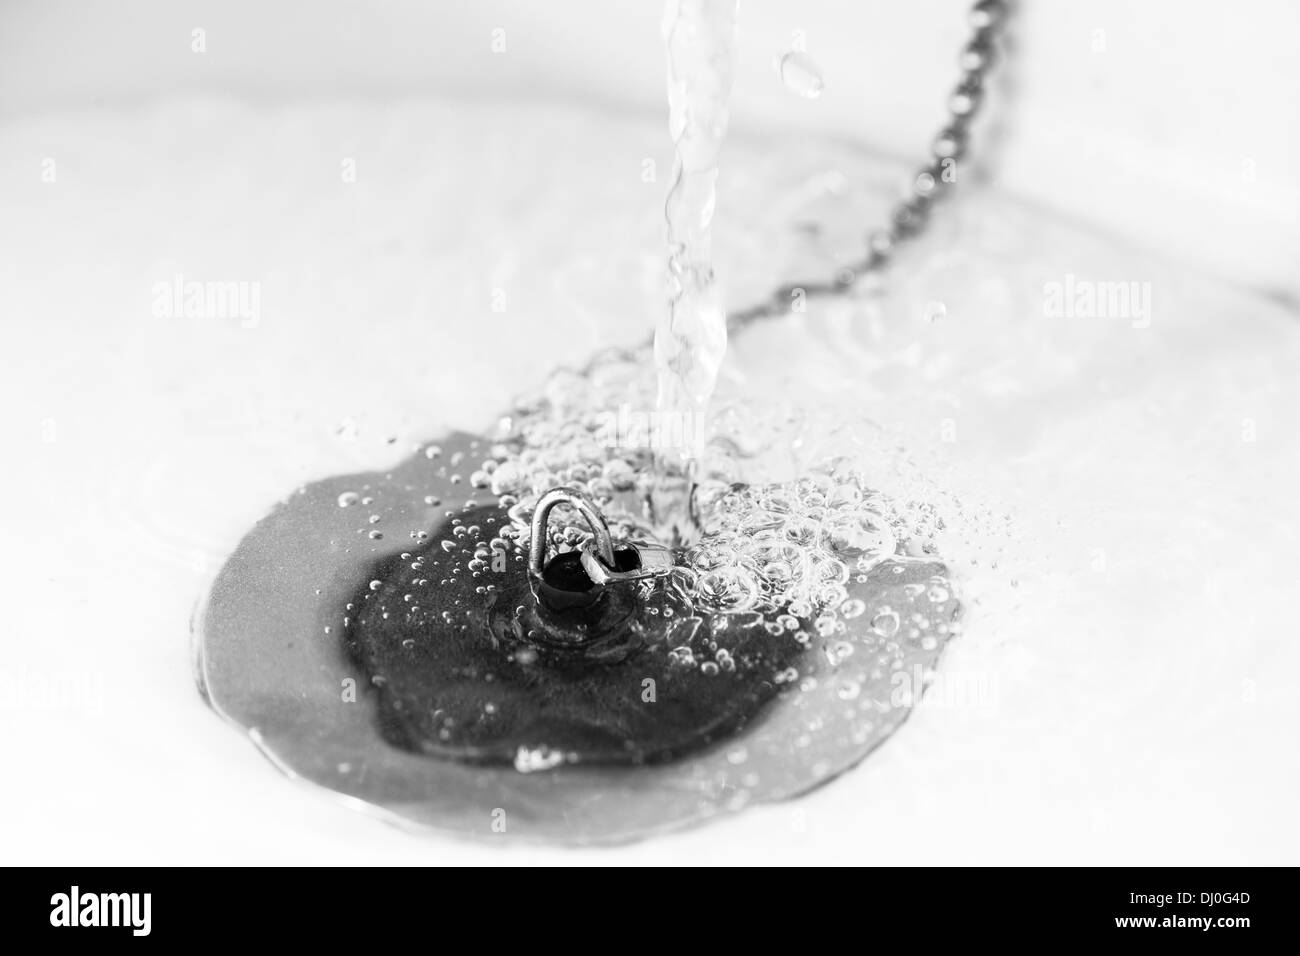 Sink and plug, running water, horizon black and white image Stock Photo